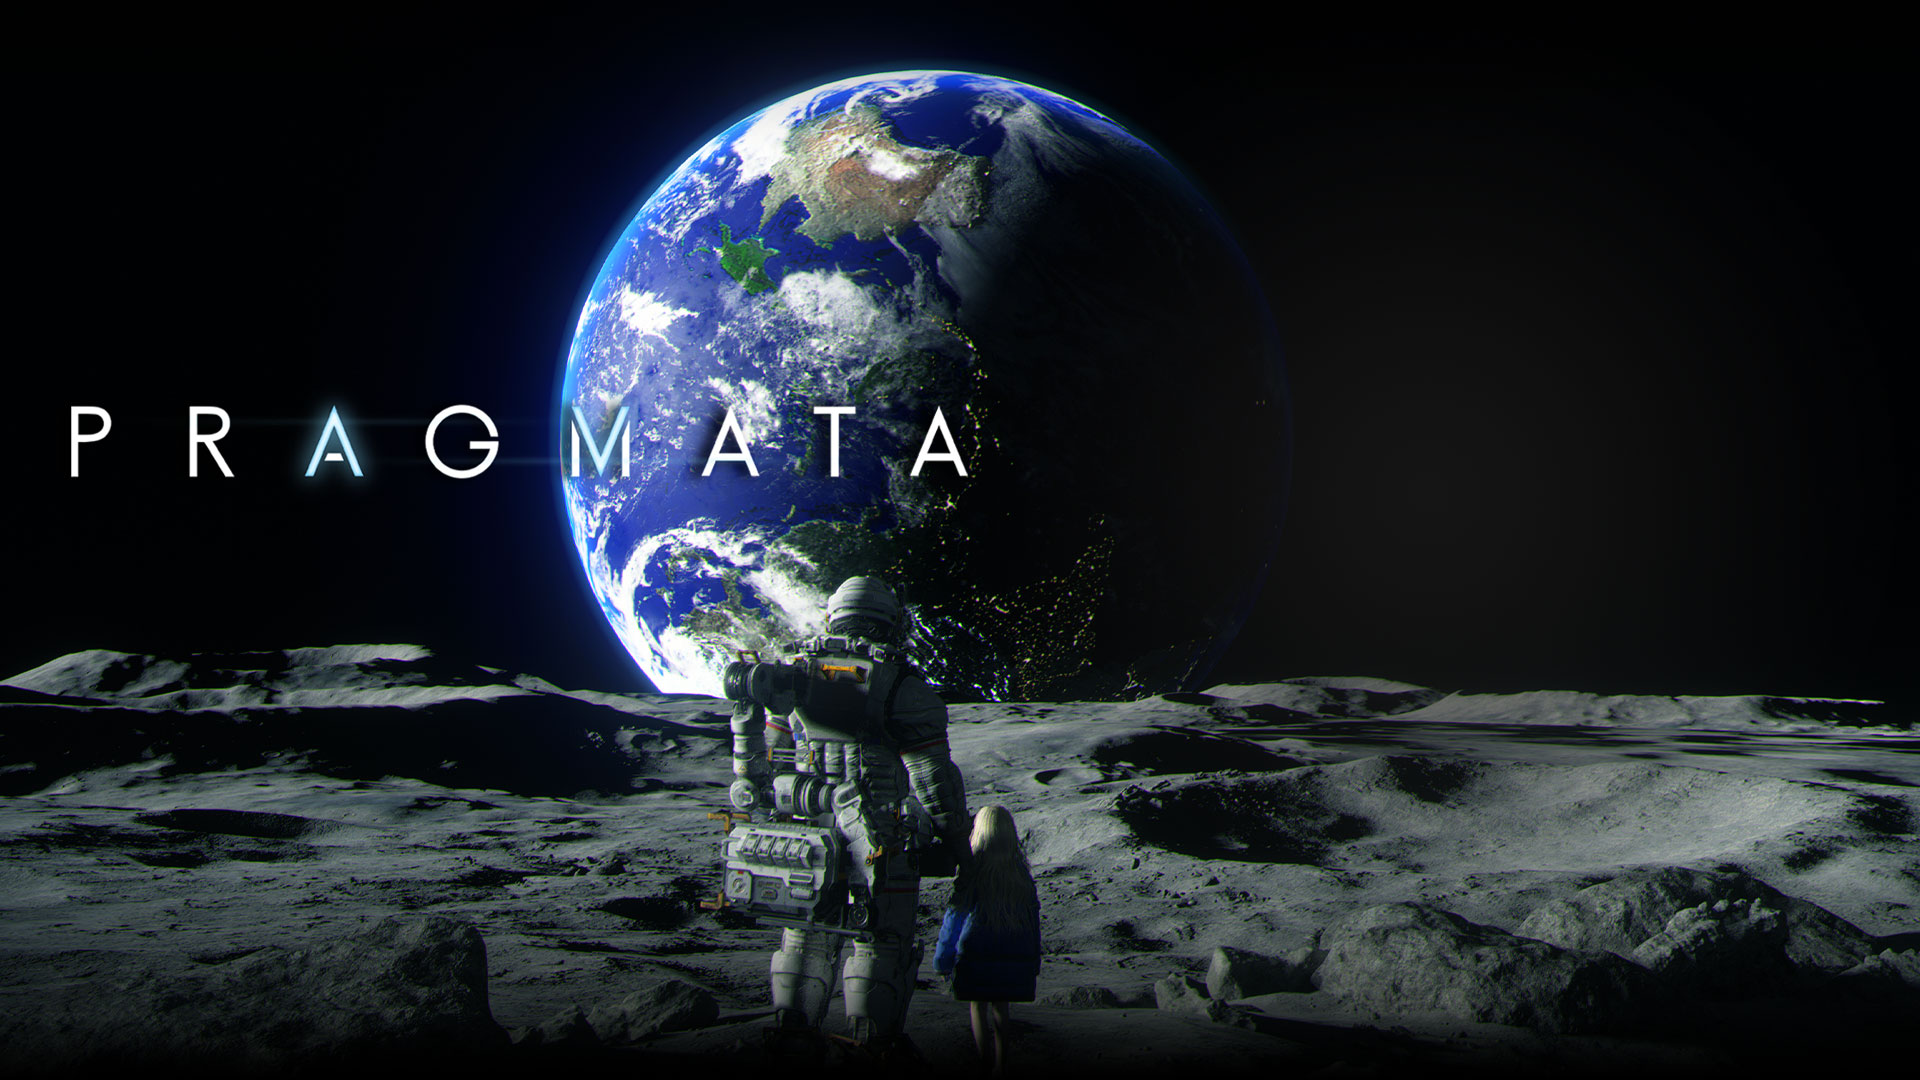 Pragmata, астронавт и молодая девушка смотрят на Землю, стоя вместе на Луне